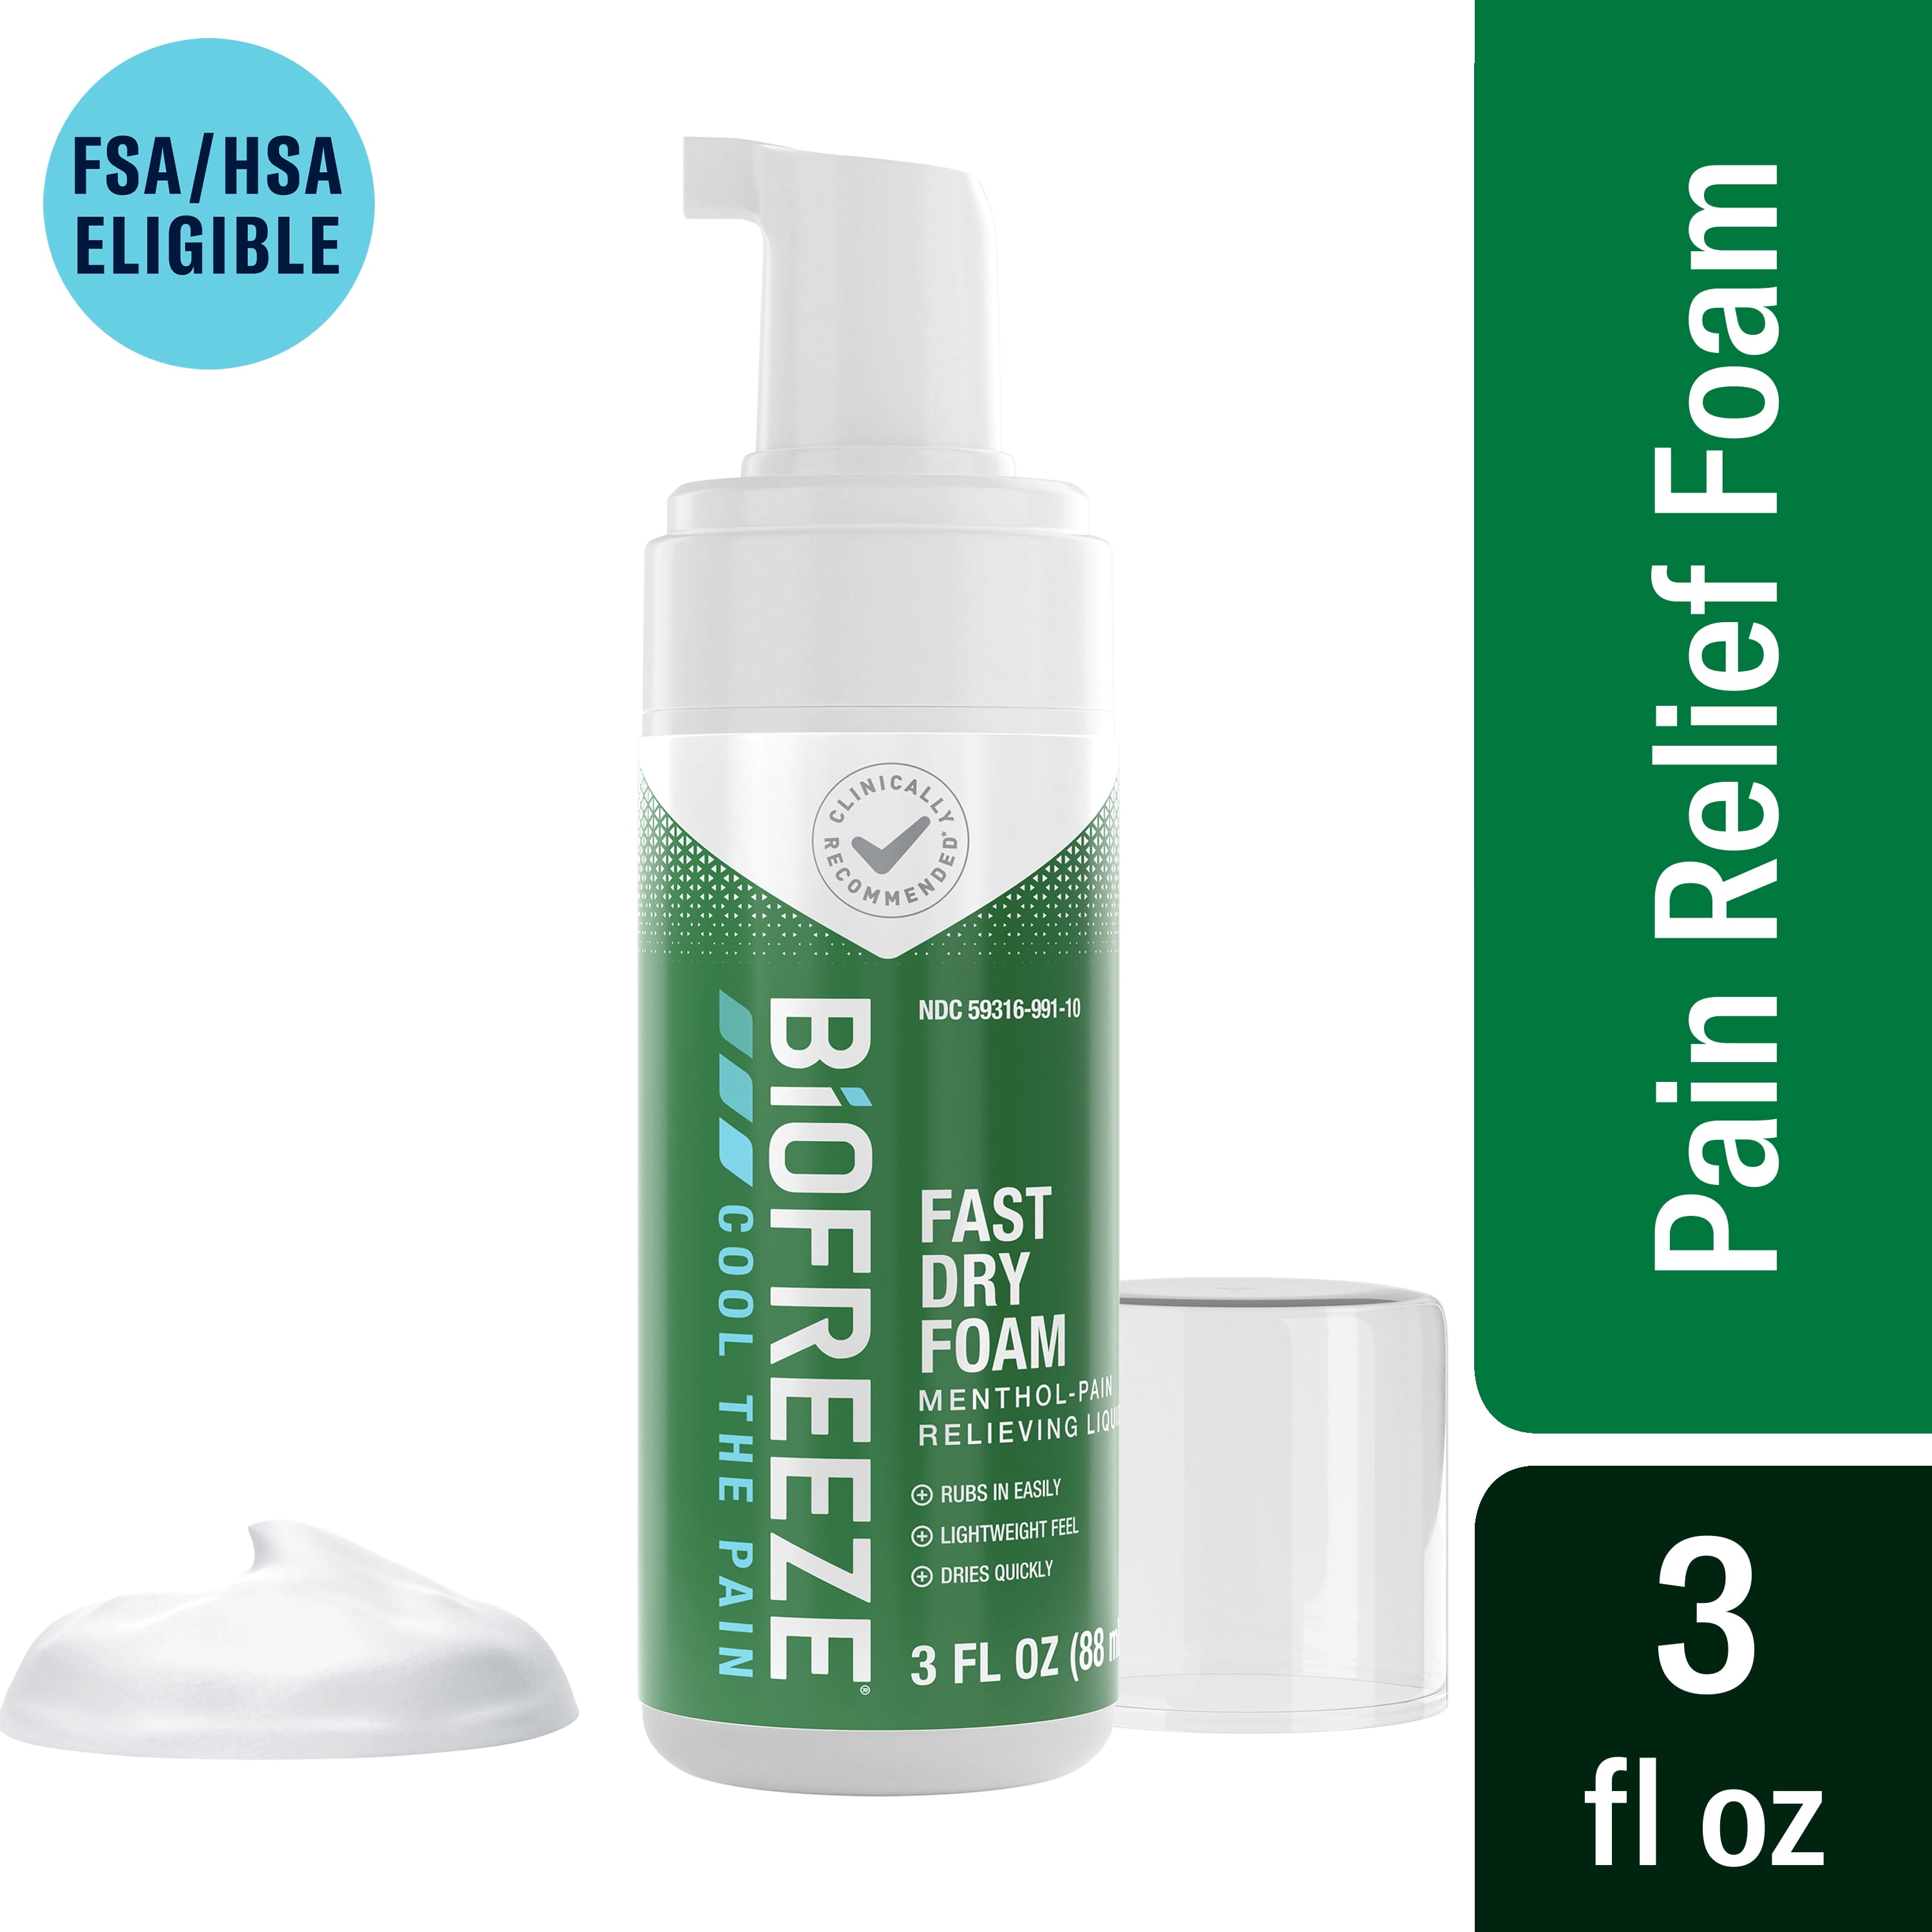 Biofreeze Menthol Pain Relief Fast Dry Foam, 3 fl oz - Mariano's